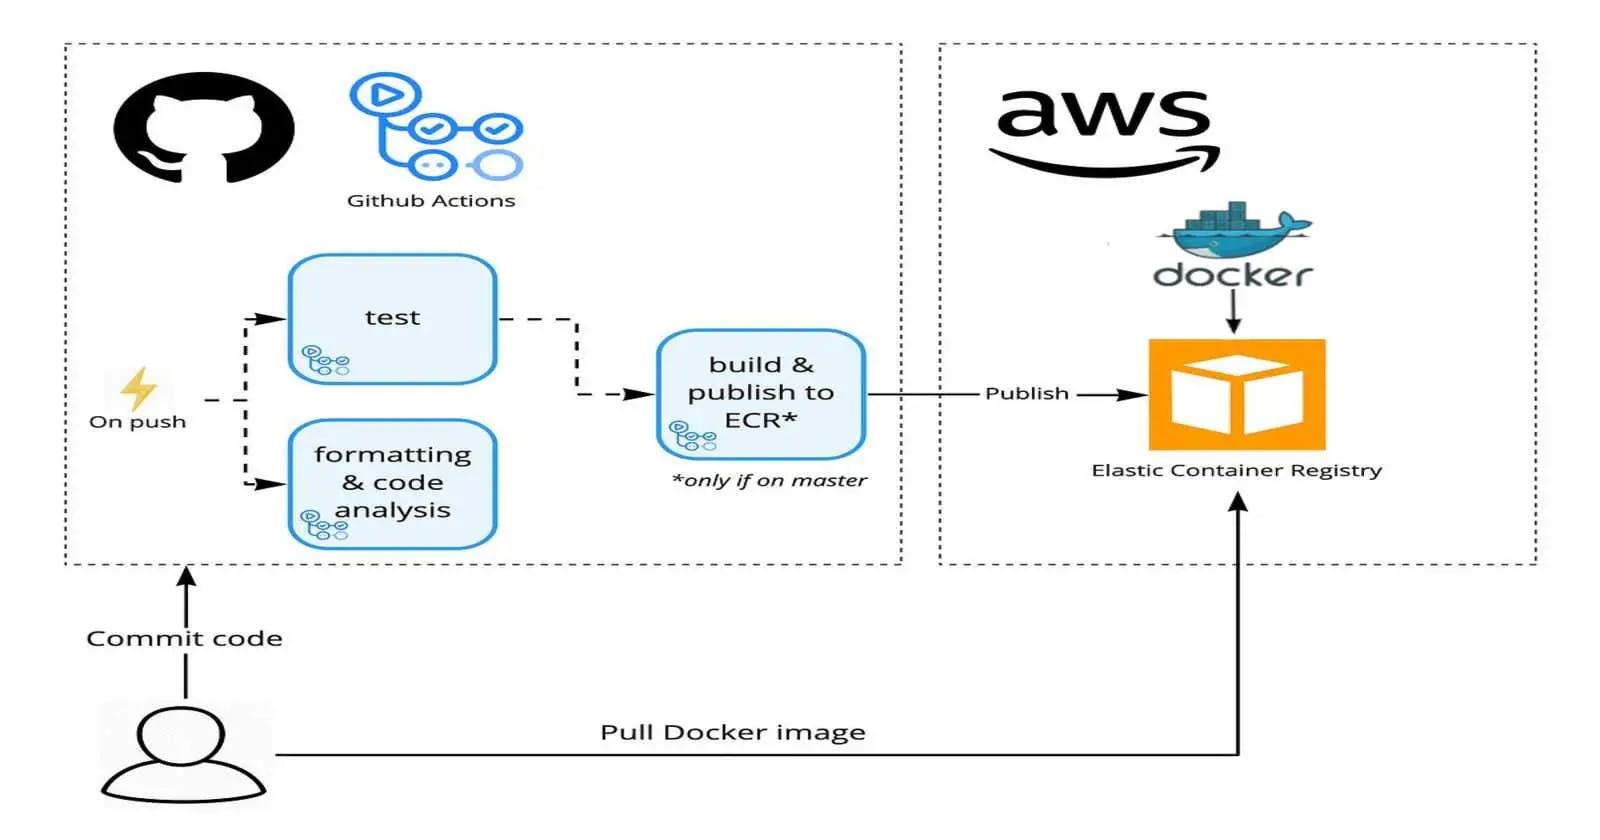 Automating Docker Image Upload to AWS ECR using GitHub Actions